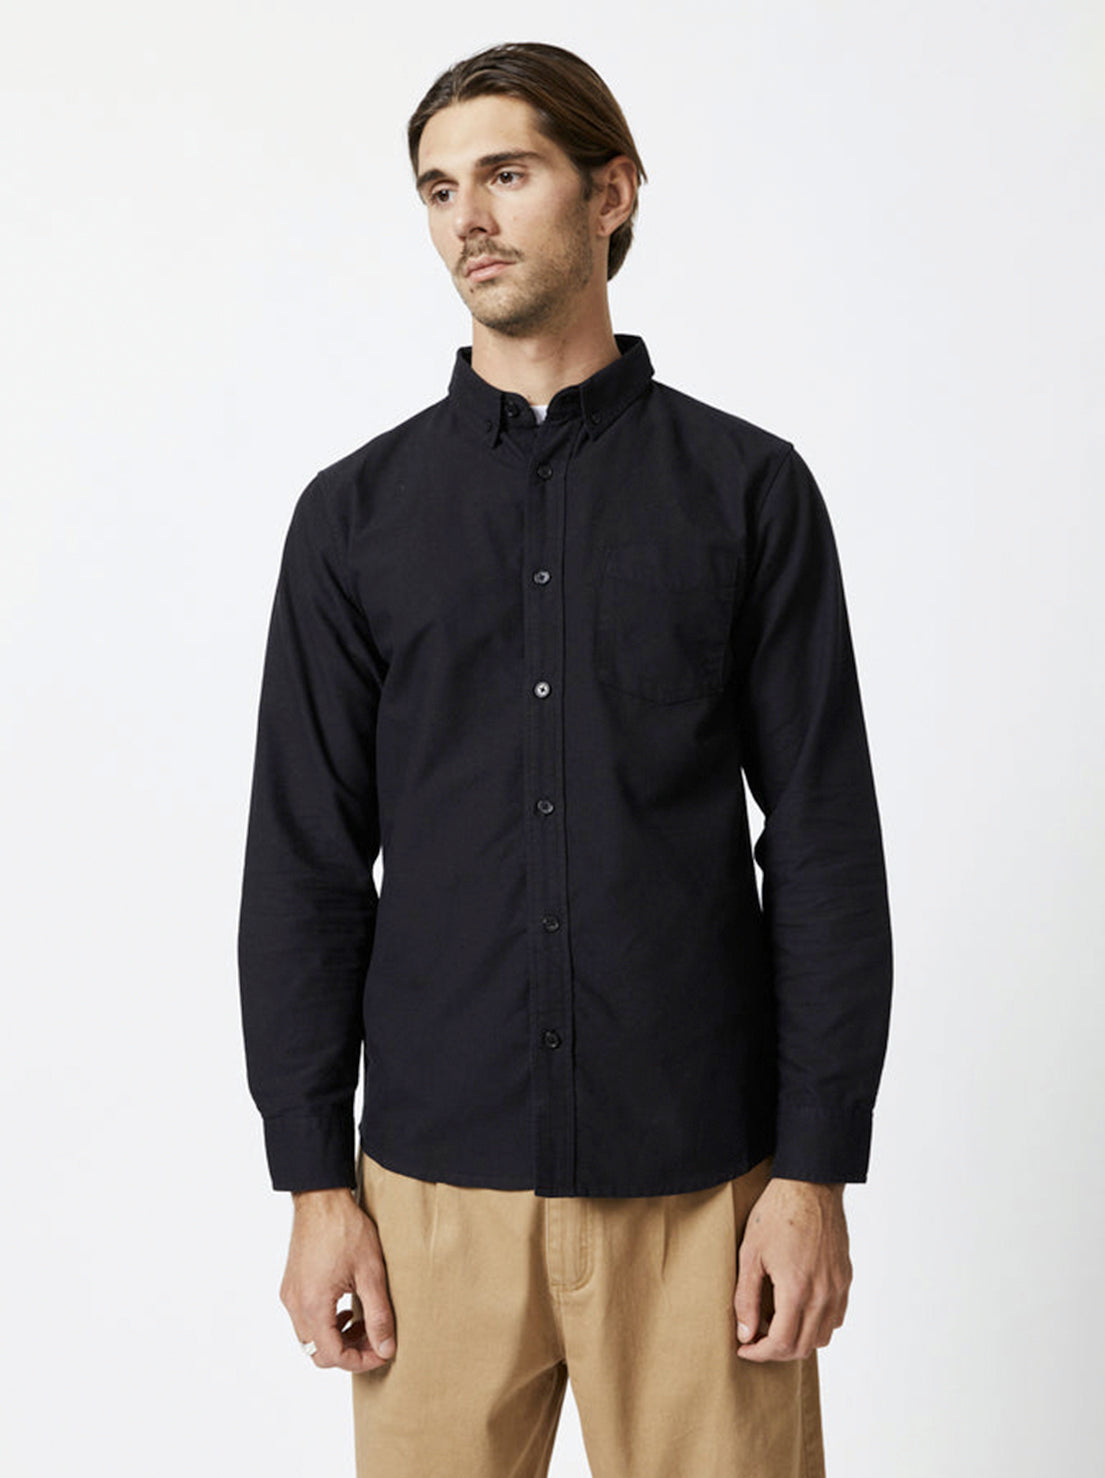 Mr Simple - Oxford LS Shirt - Black